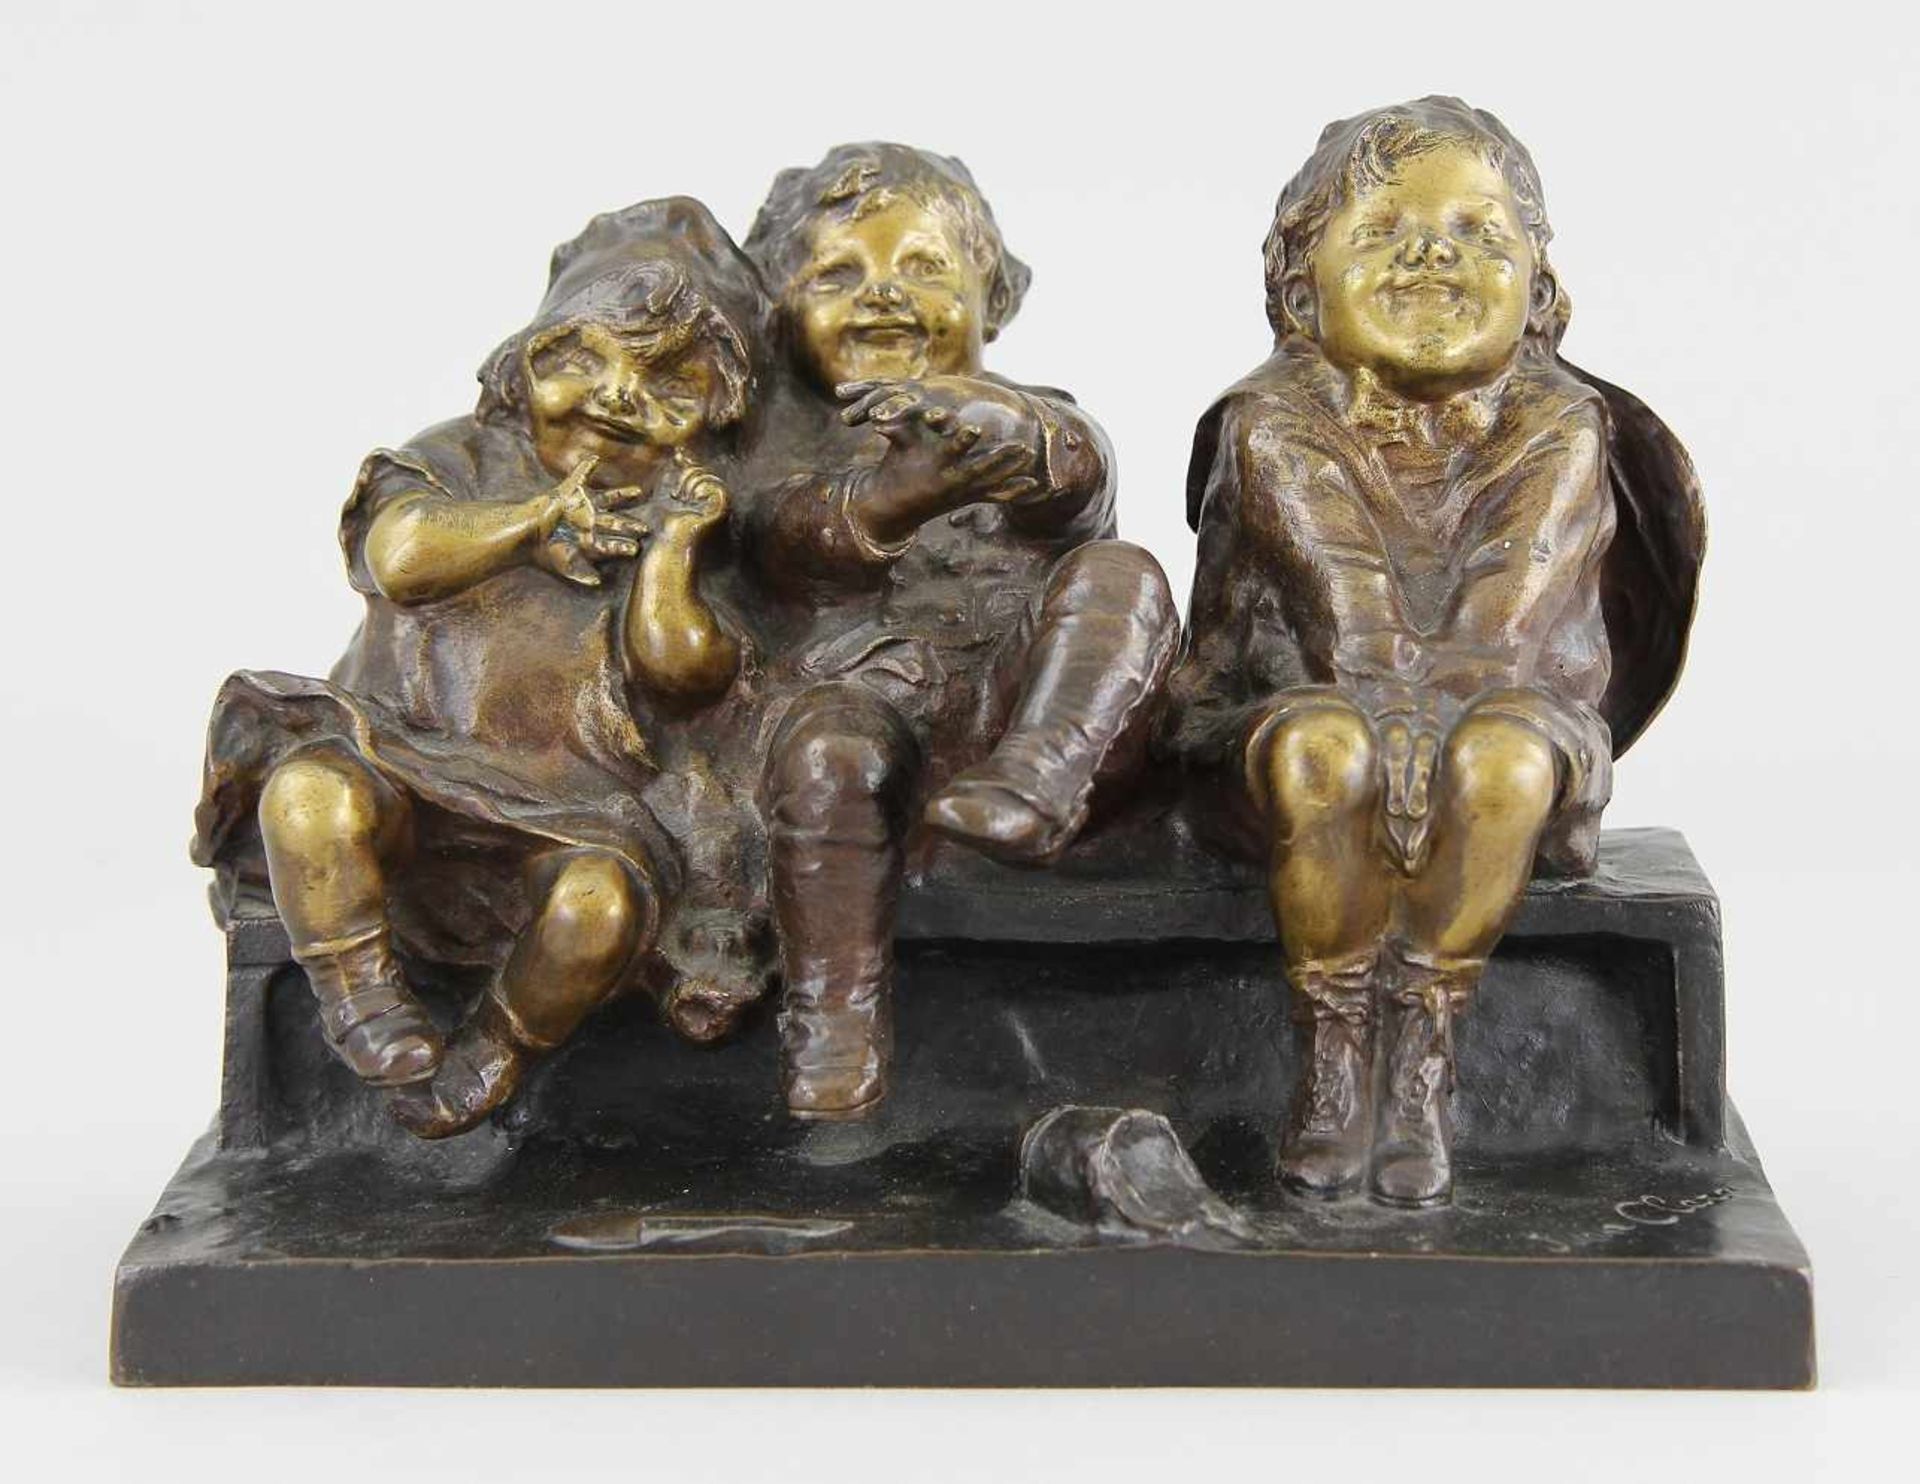 Clara i Ayats, Juan (Olot 1875 - 1958) Bronze dunkelbraun und goldfarben patiniert, drei lachende